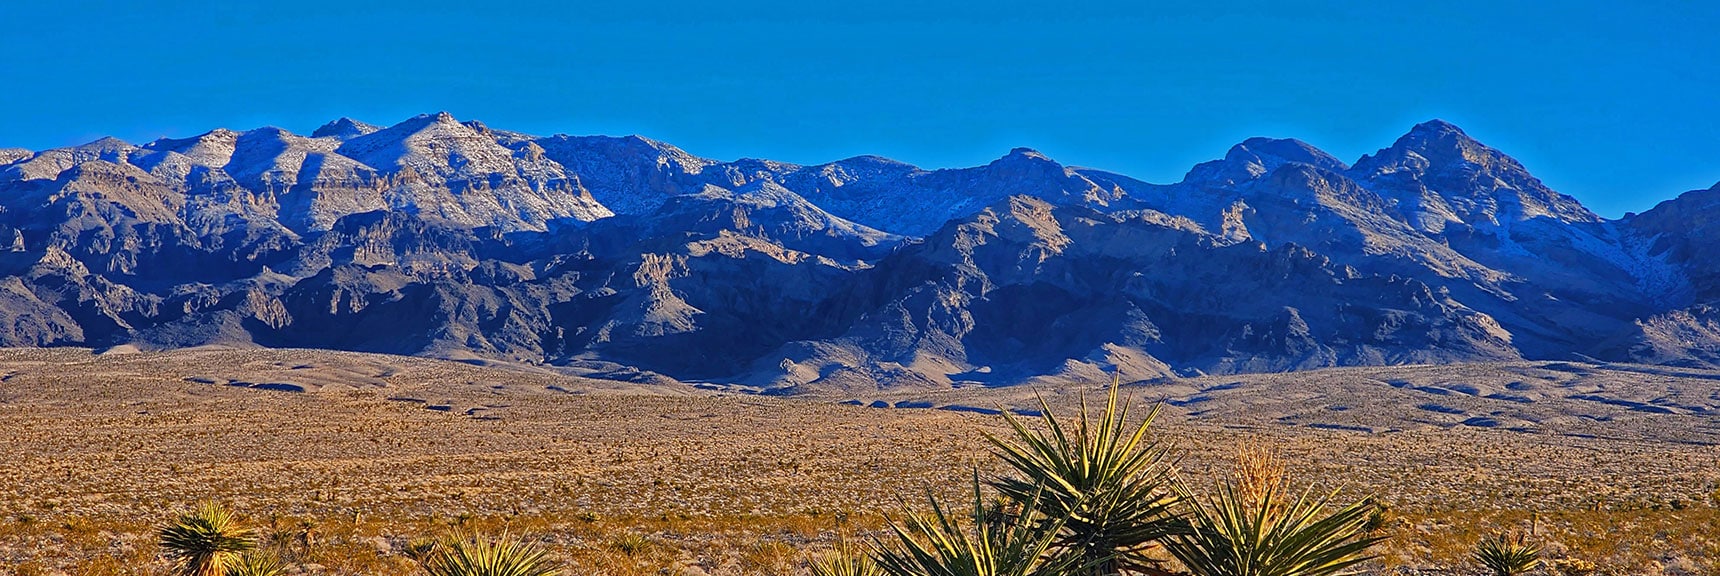 Southern Region of the Sheep Range | Fossil Ridge Far East | Desert National Wildlife Refuge, Nevada